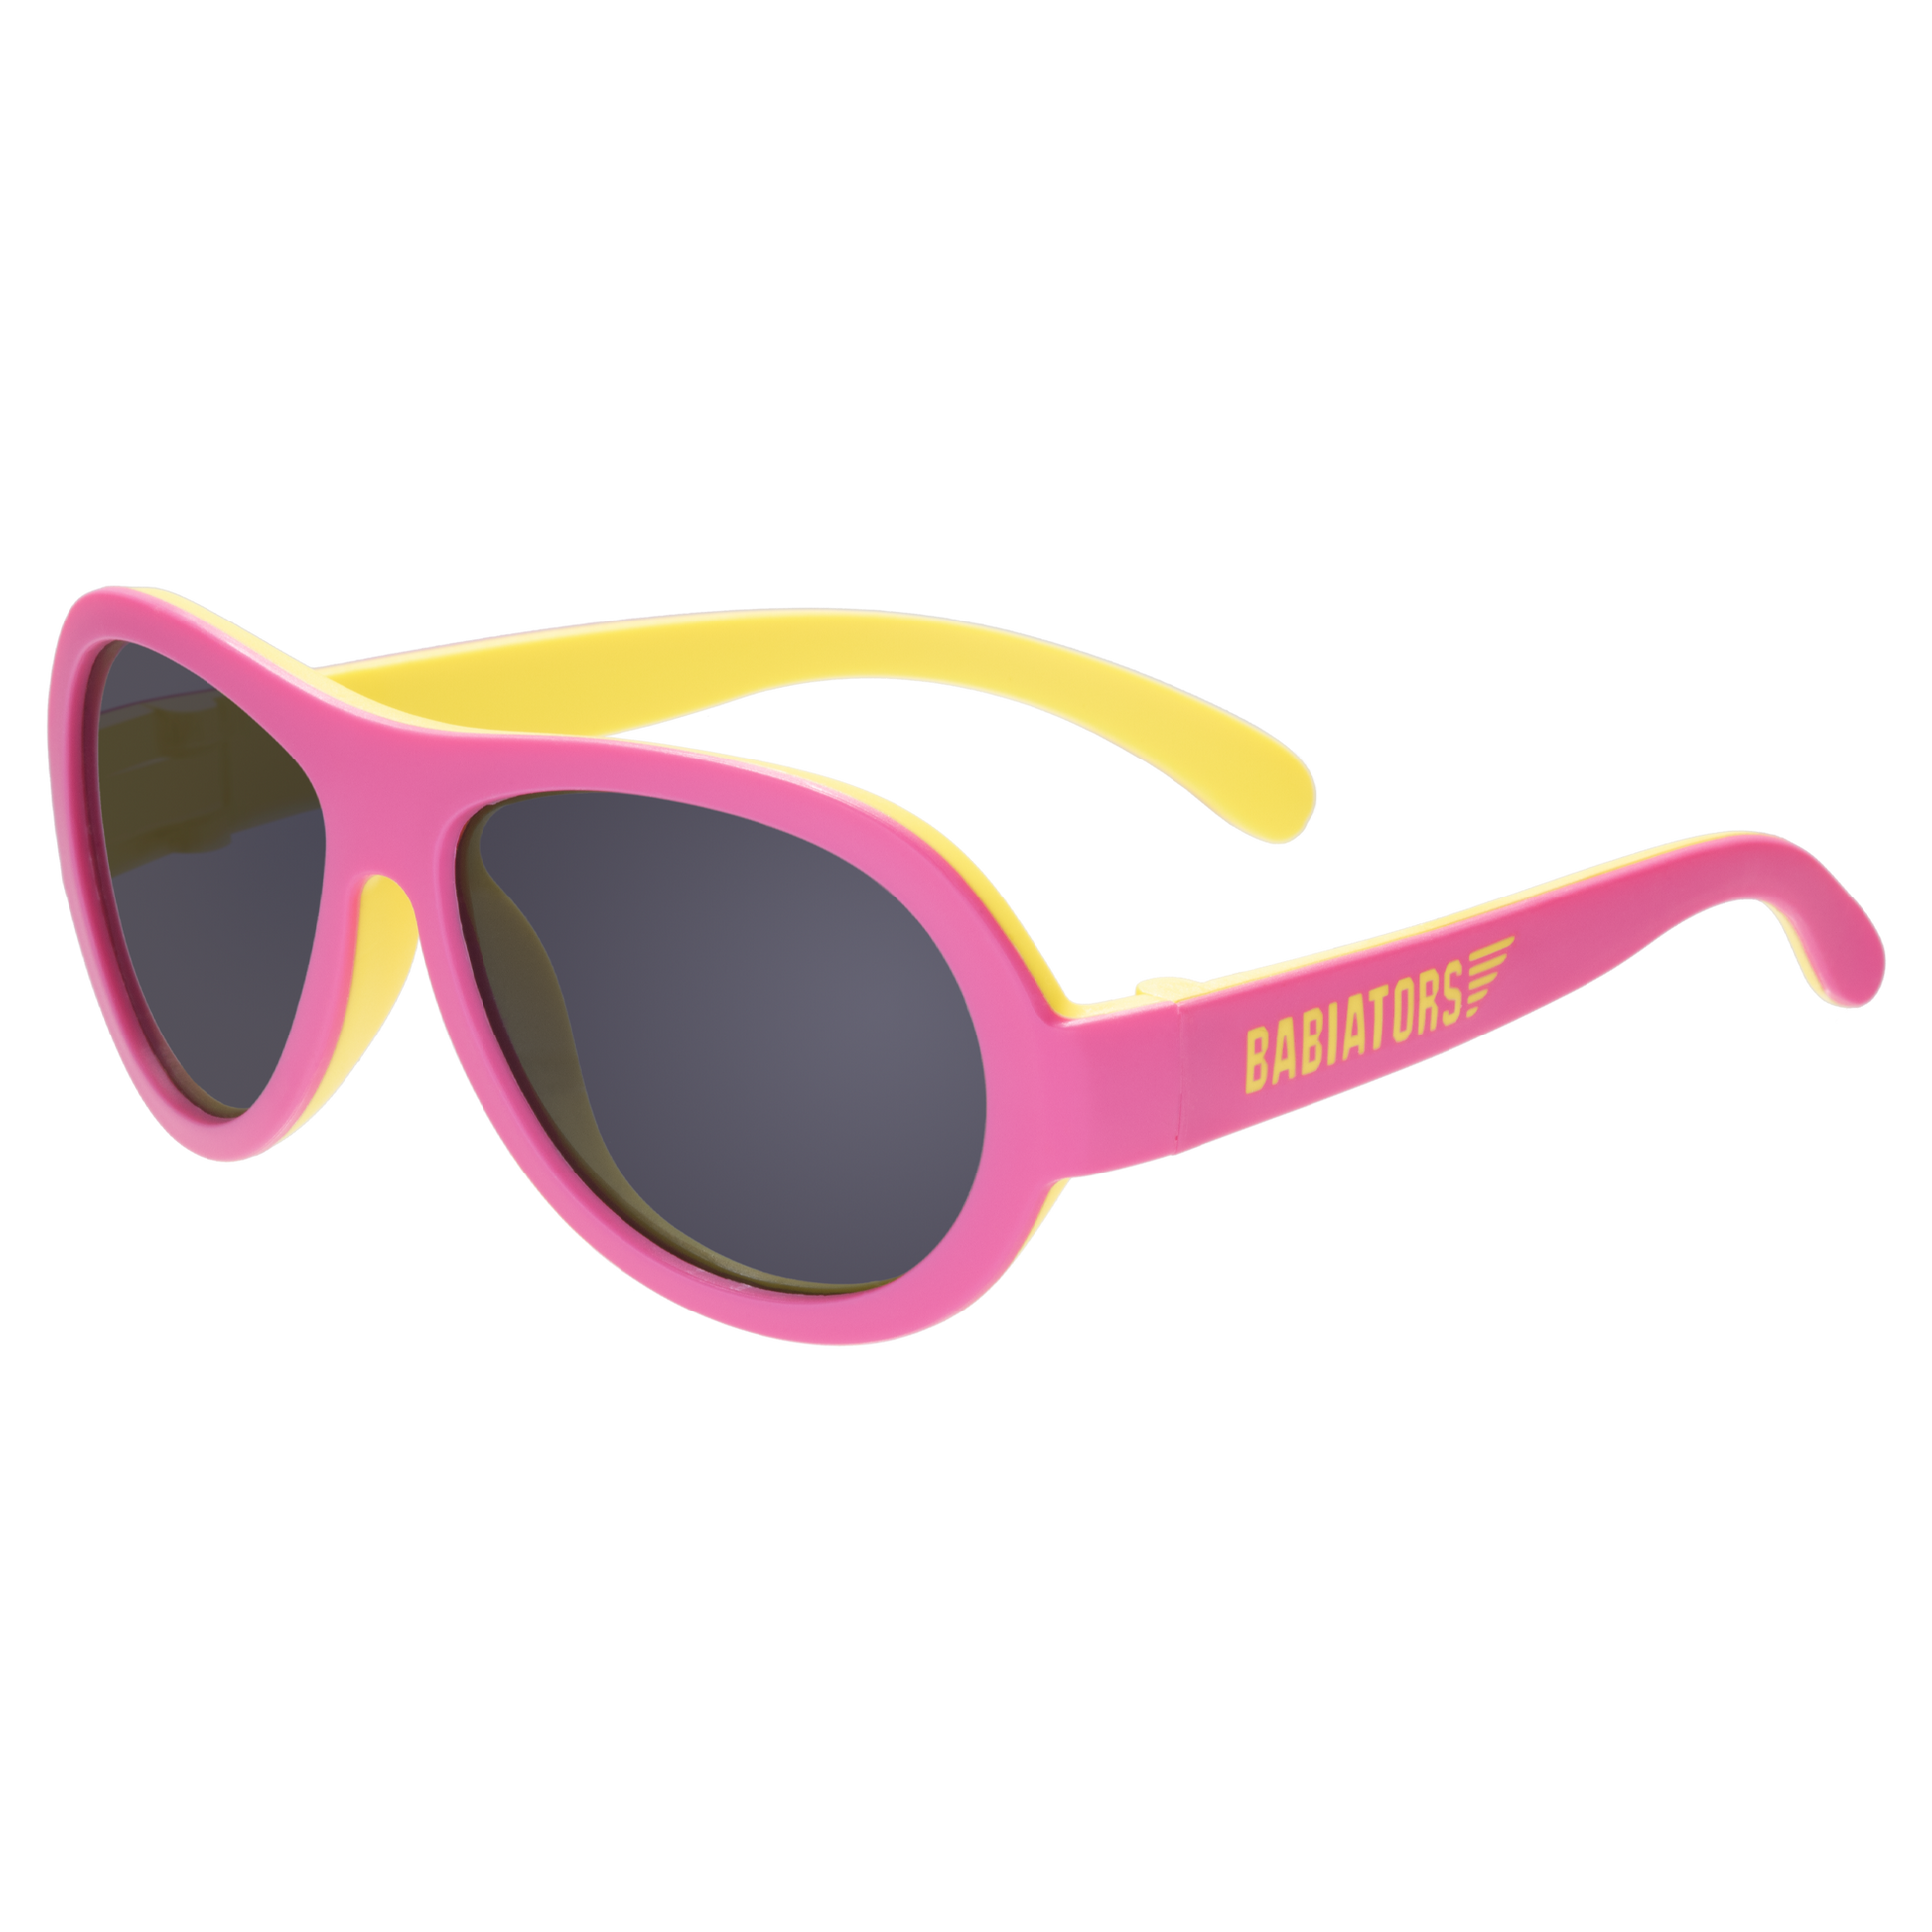 Two-toned Aviator/Non-polarized Sunglasses "Pink Lemonade"